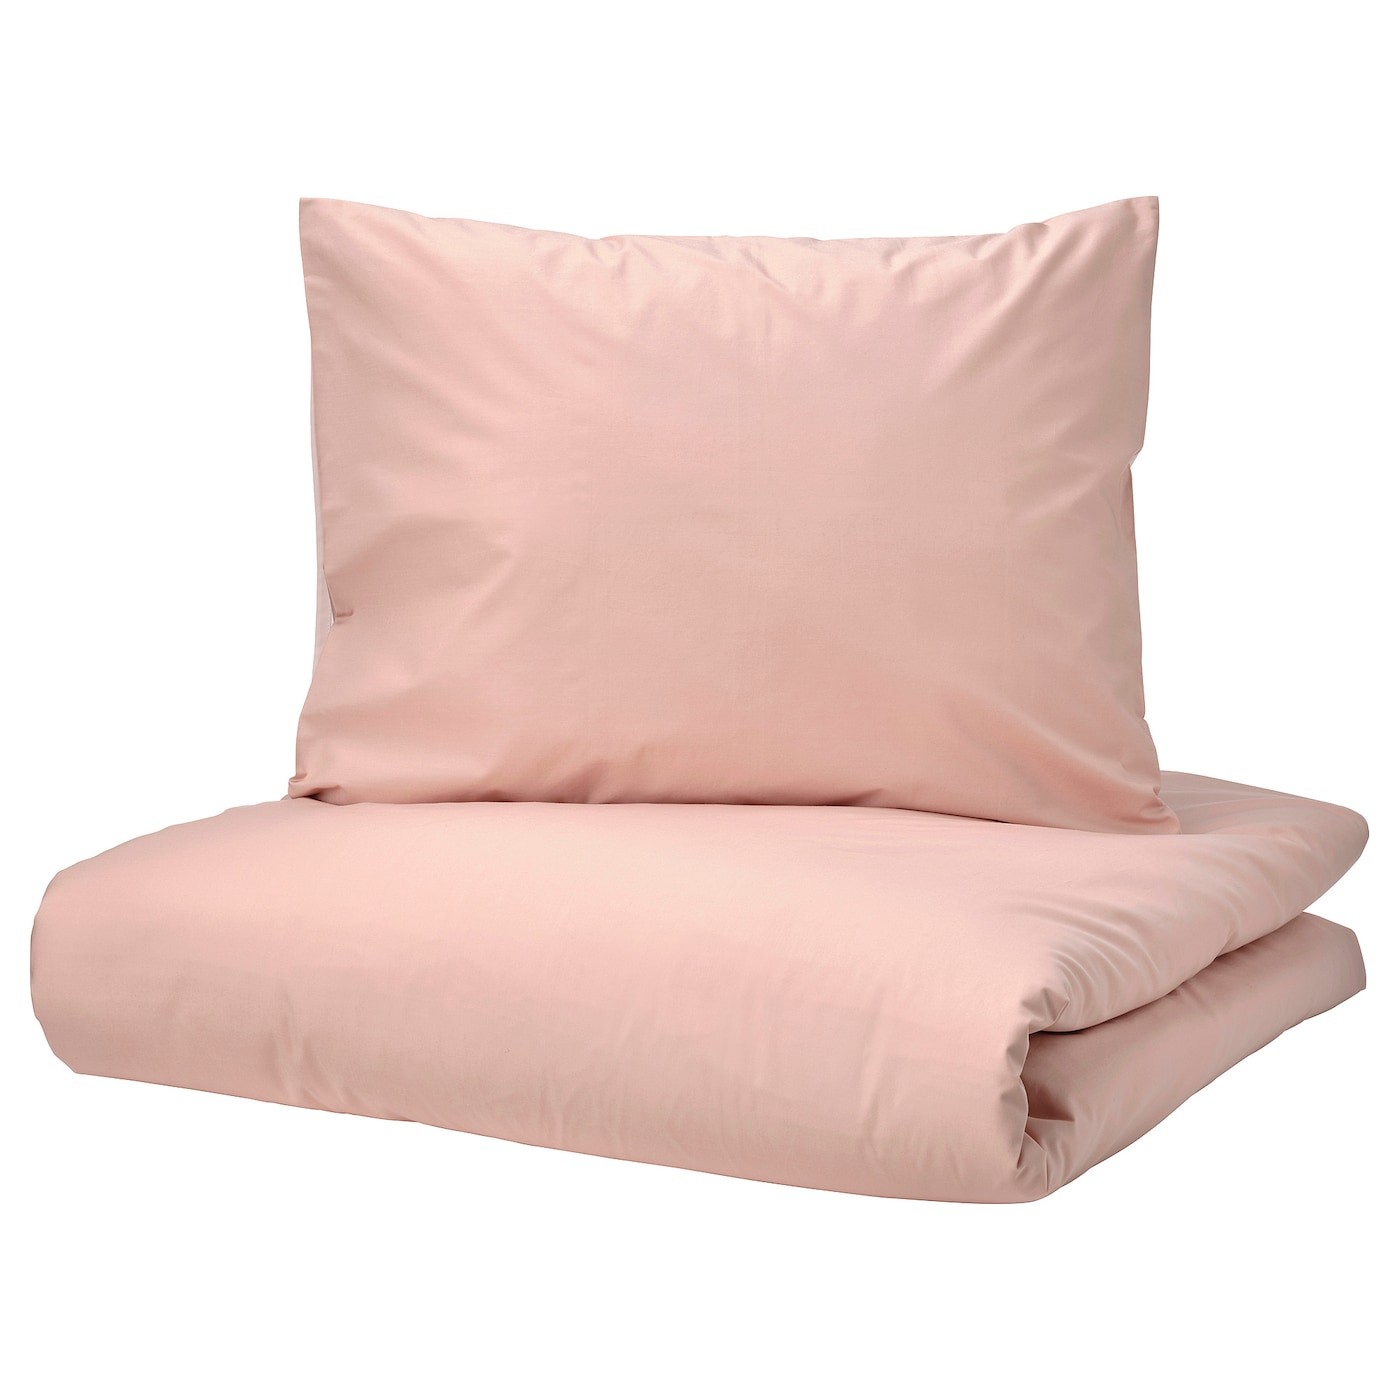 IKEA STRANDTALL СТРАНДТАЛЛ Пододеяльник и 2 наволочки, темно-розовый / светло-розовый, 200x200/50x60 см 90542791 905.427.91